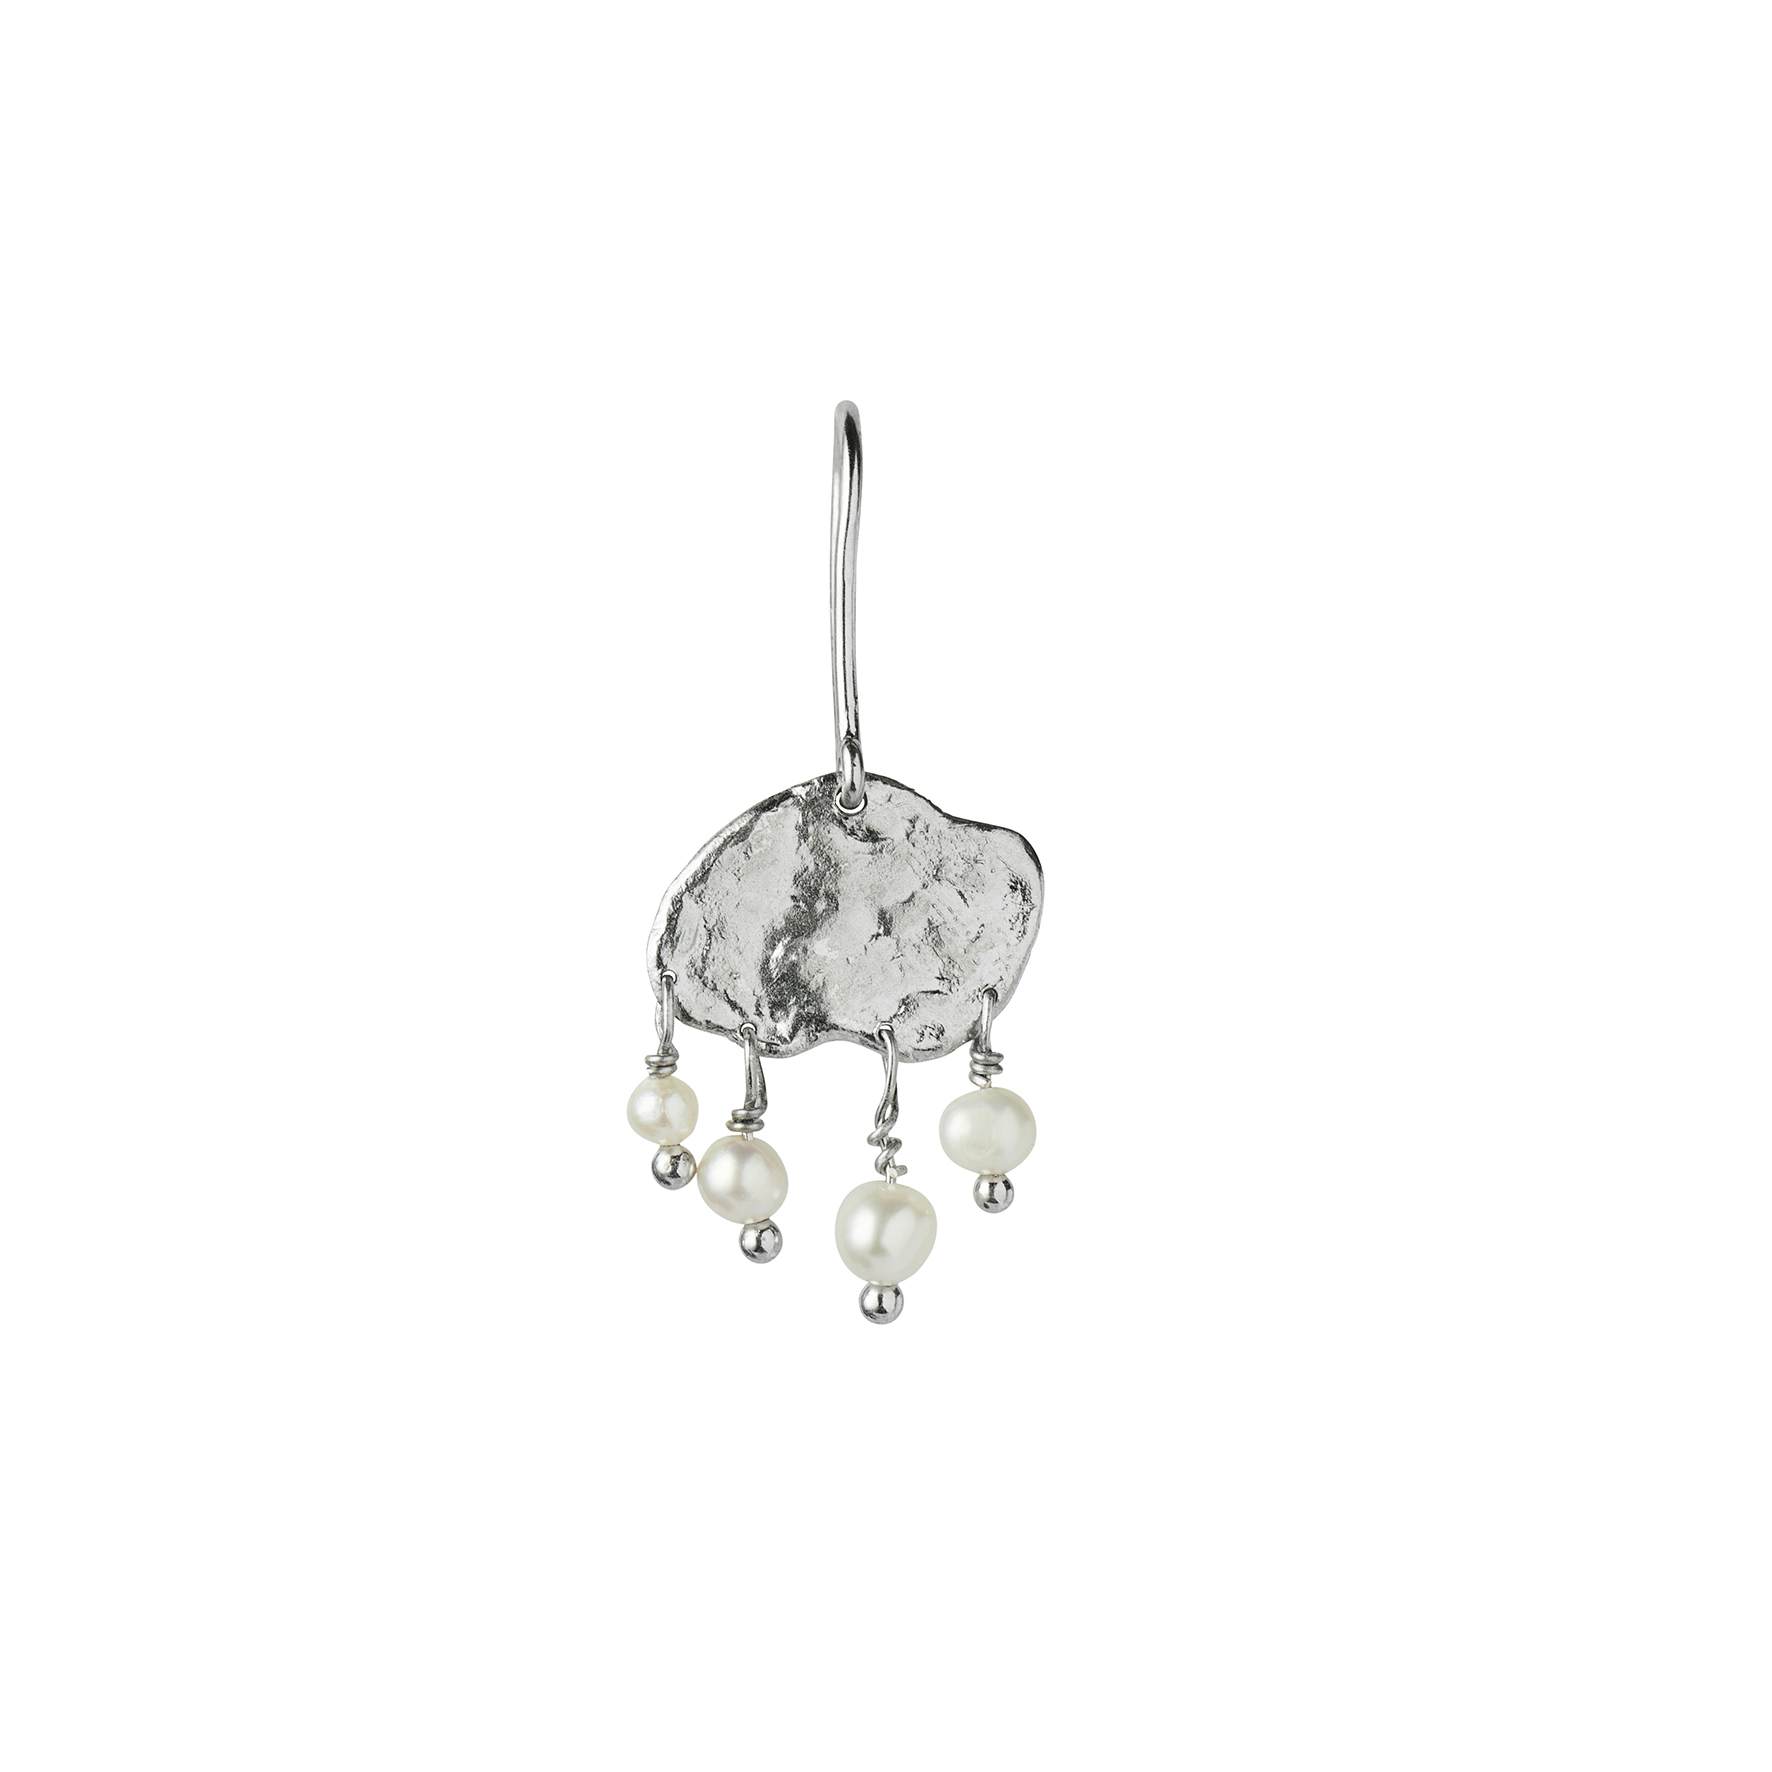 Big Gold Splash Earring – Elegant Pearls från STINE A Jewelry i Silver Sterling 925